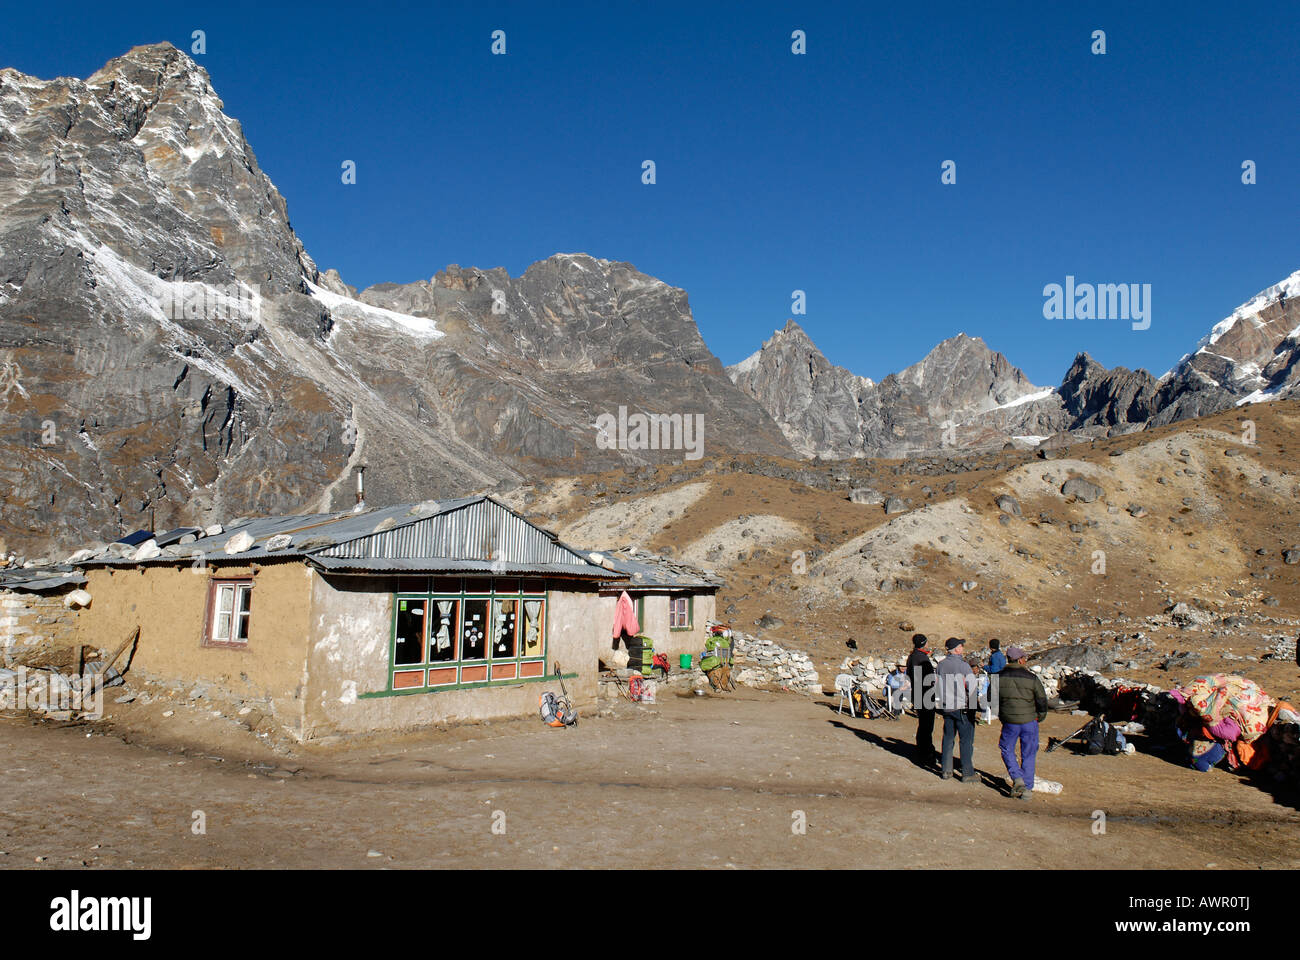 Trekking lodge à Dzonglha (4830), Tal Khola Chola, Khumbu Himal, parc national de Sagarmatha (Népal) Banque D'Images